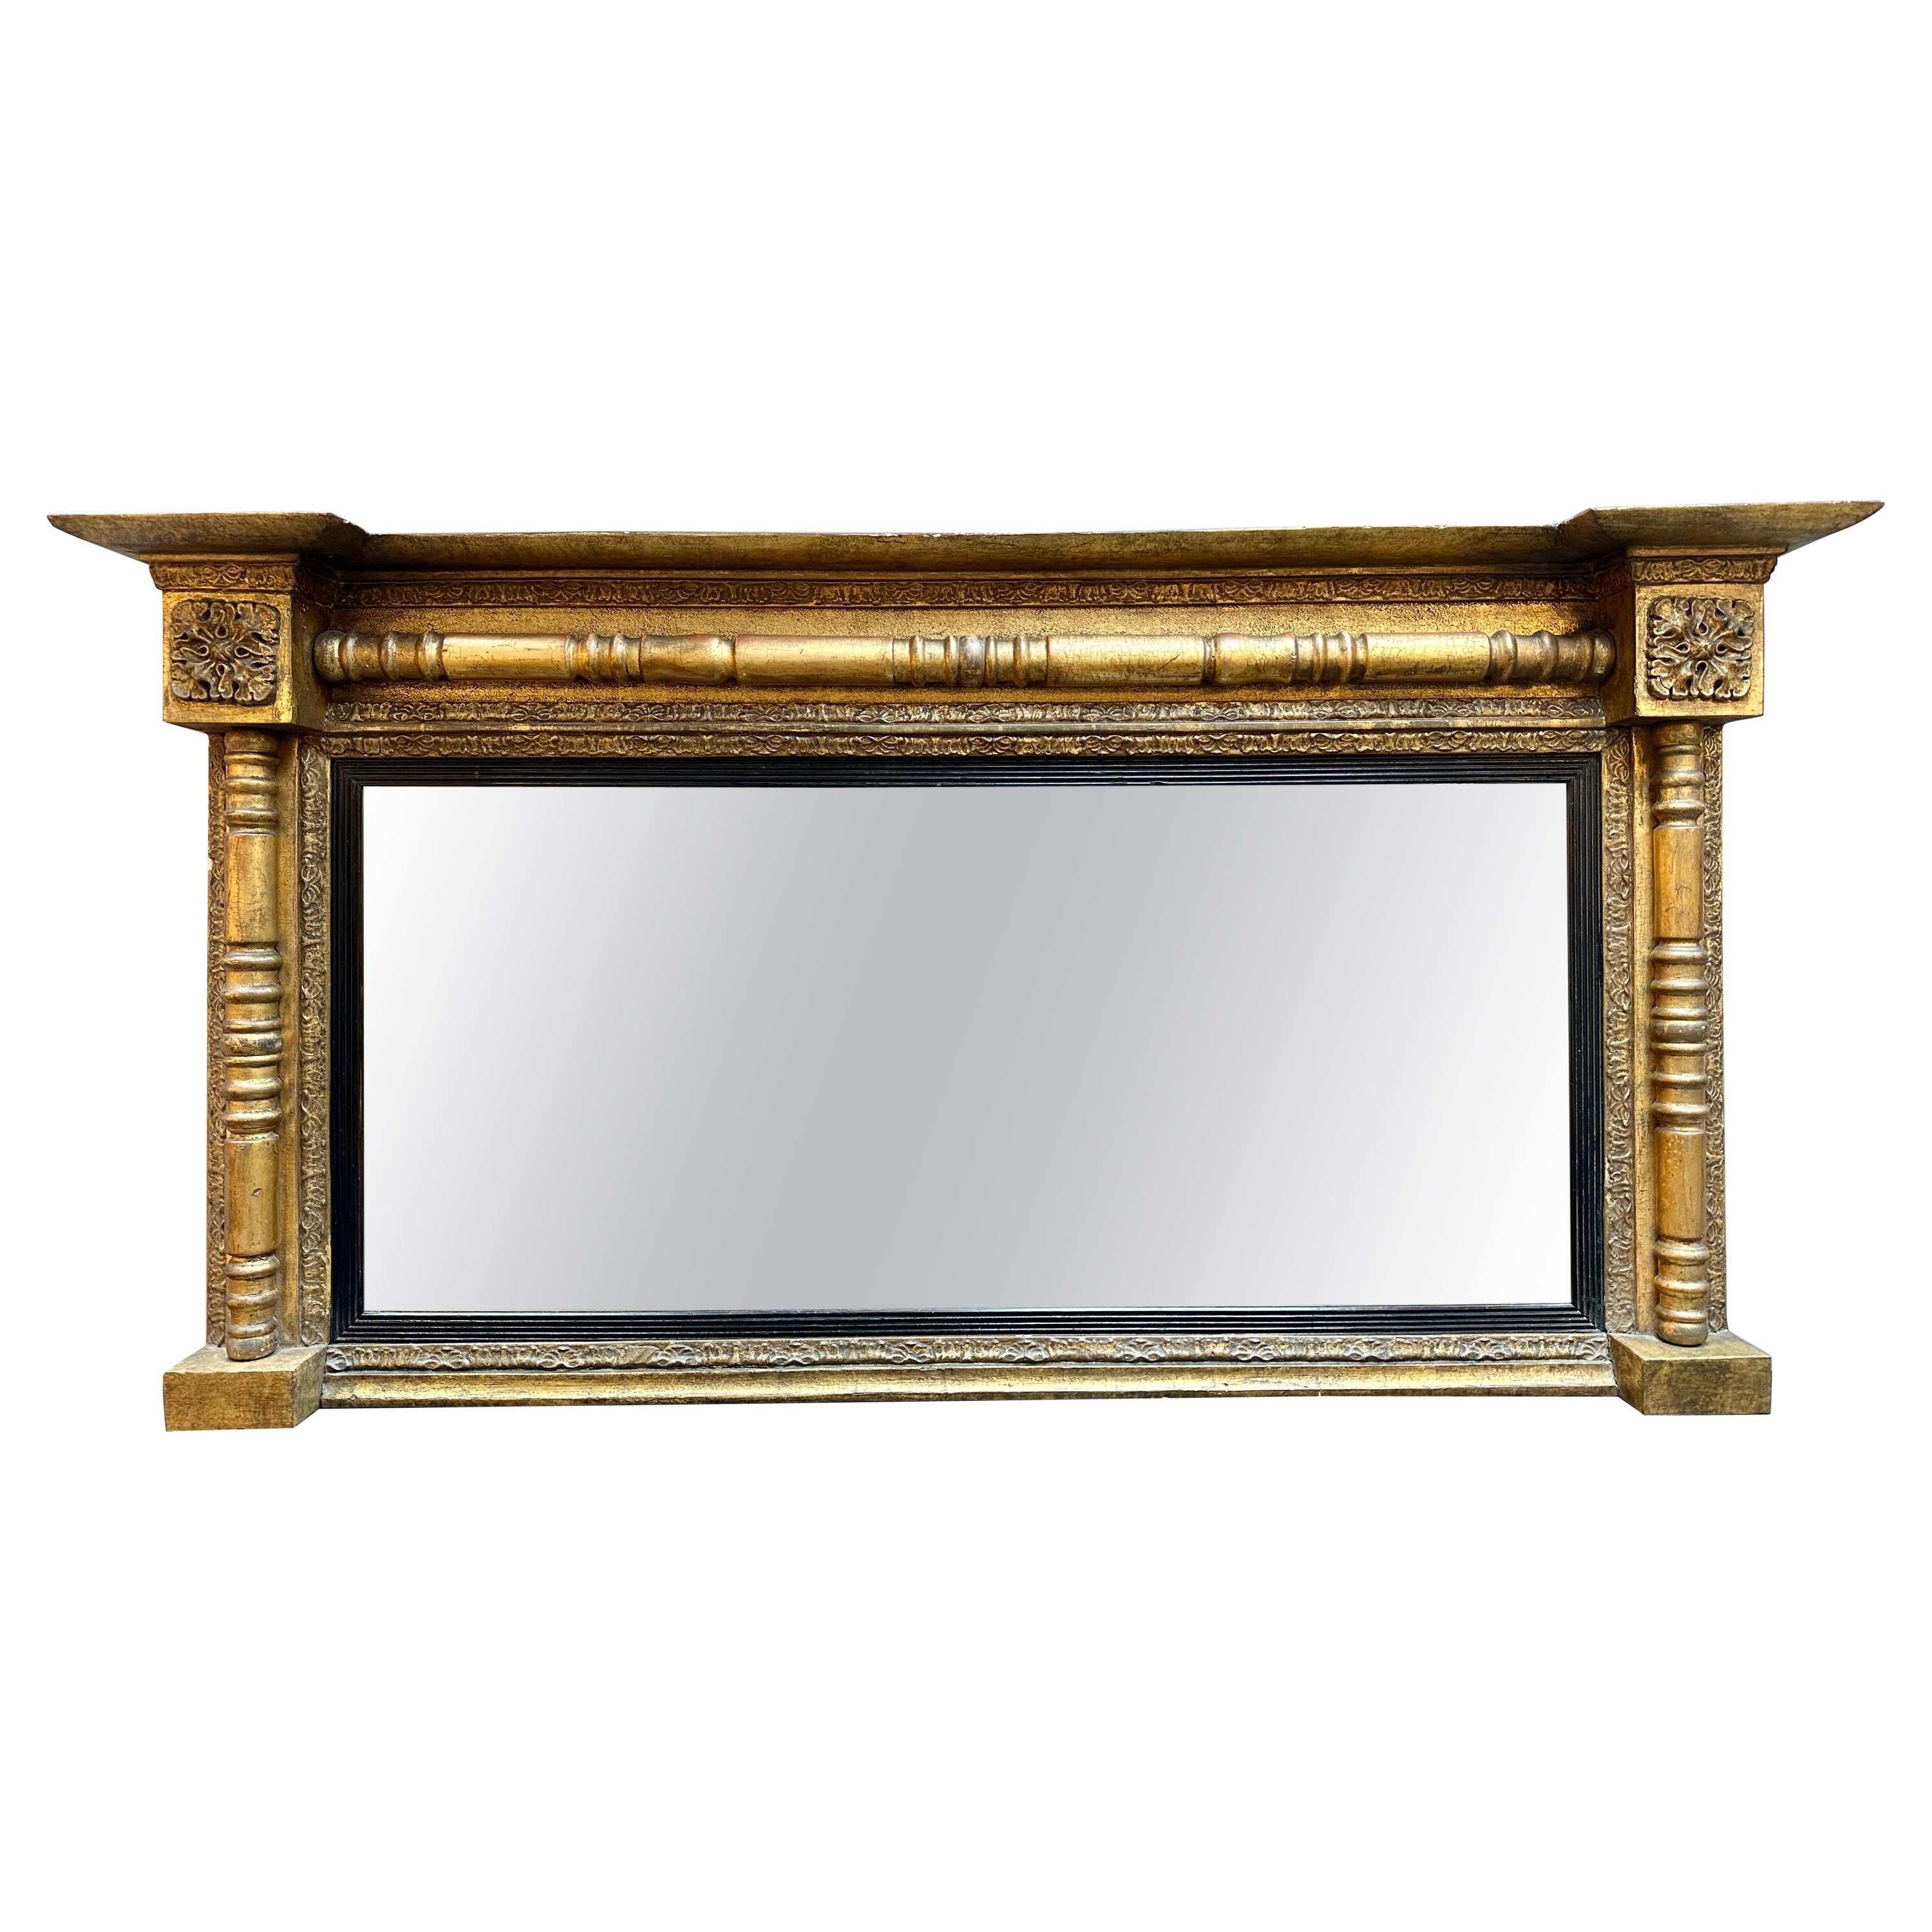 An Antique English Regency Gold Gilt Overmantel Mirror 